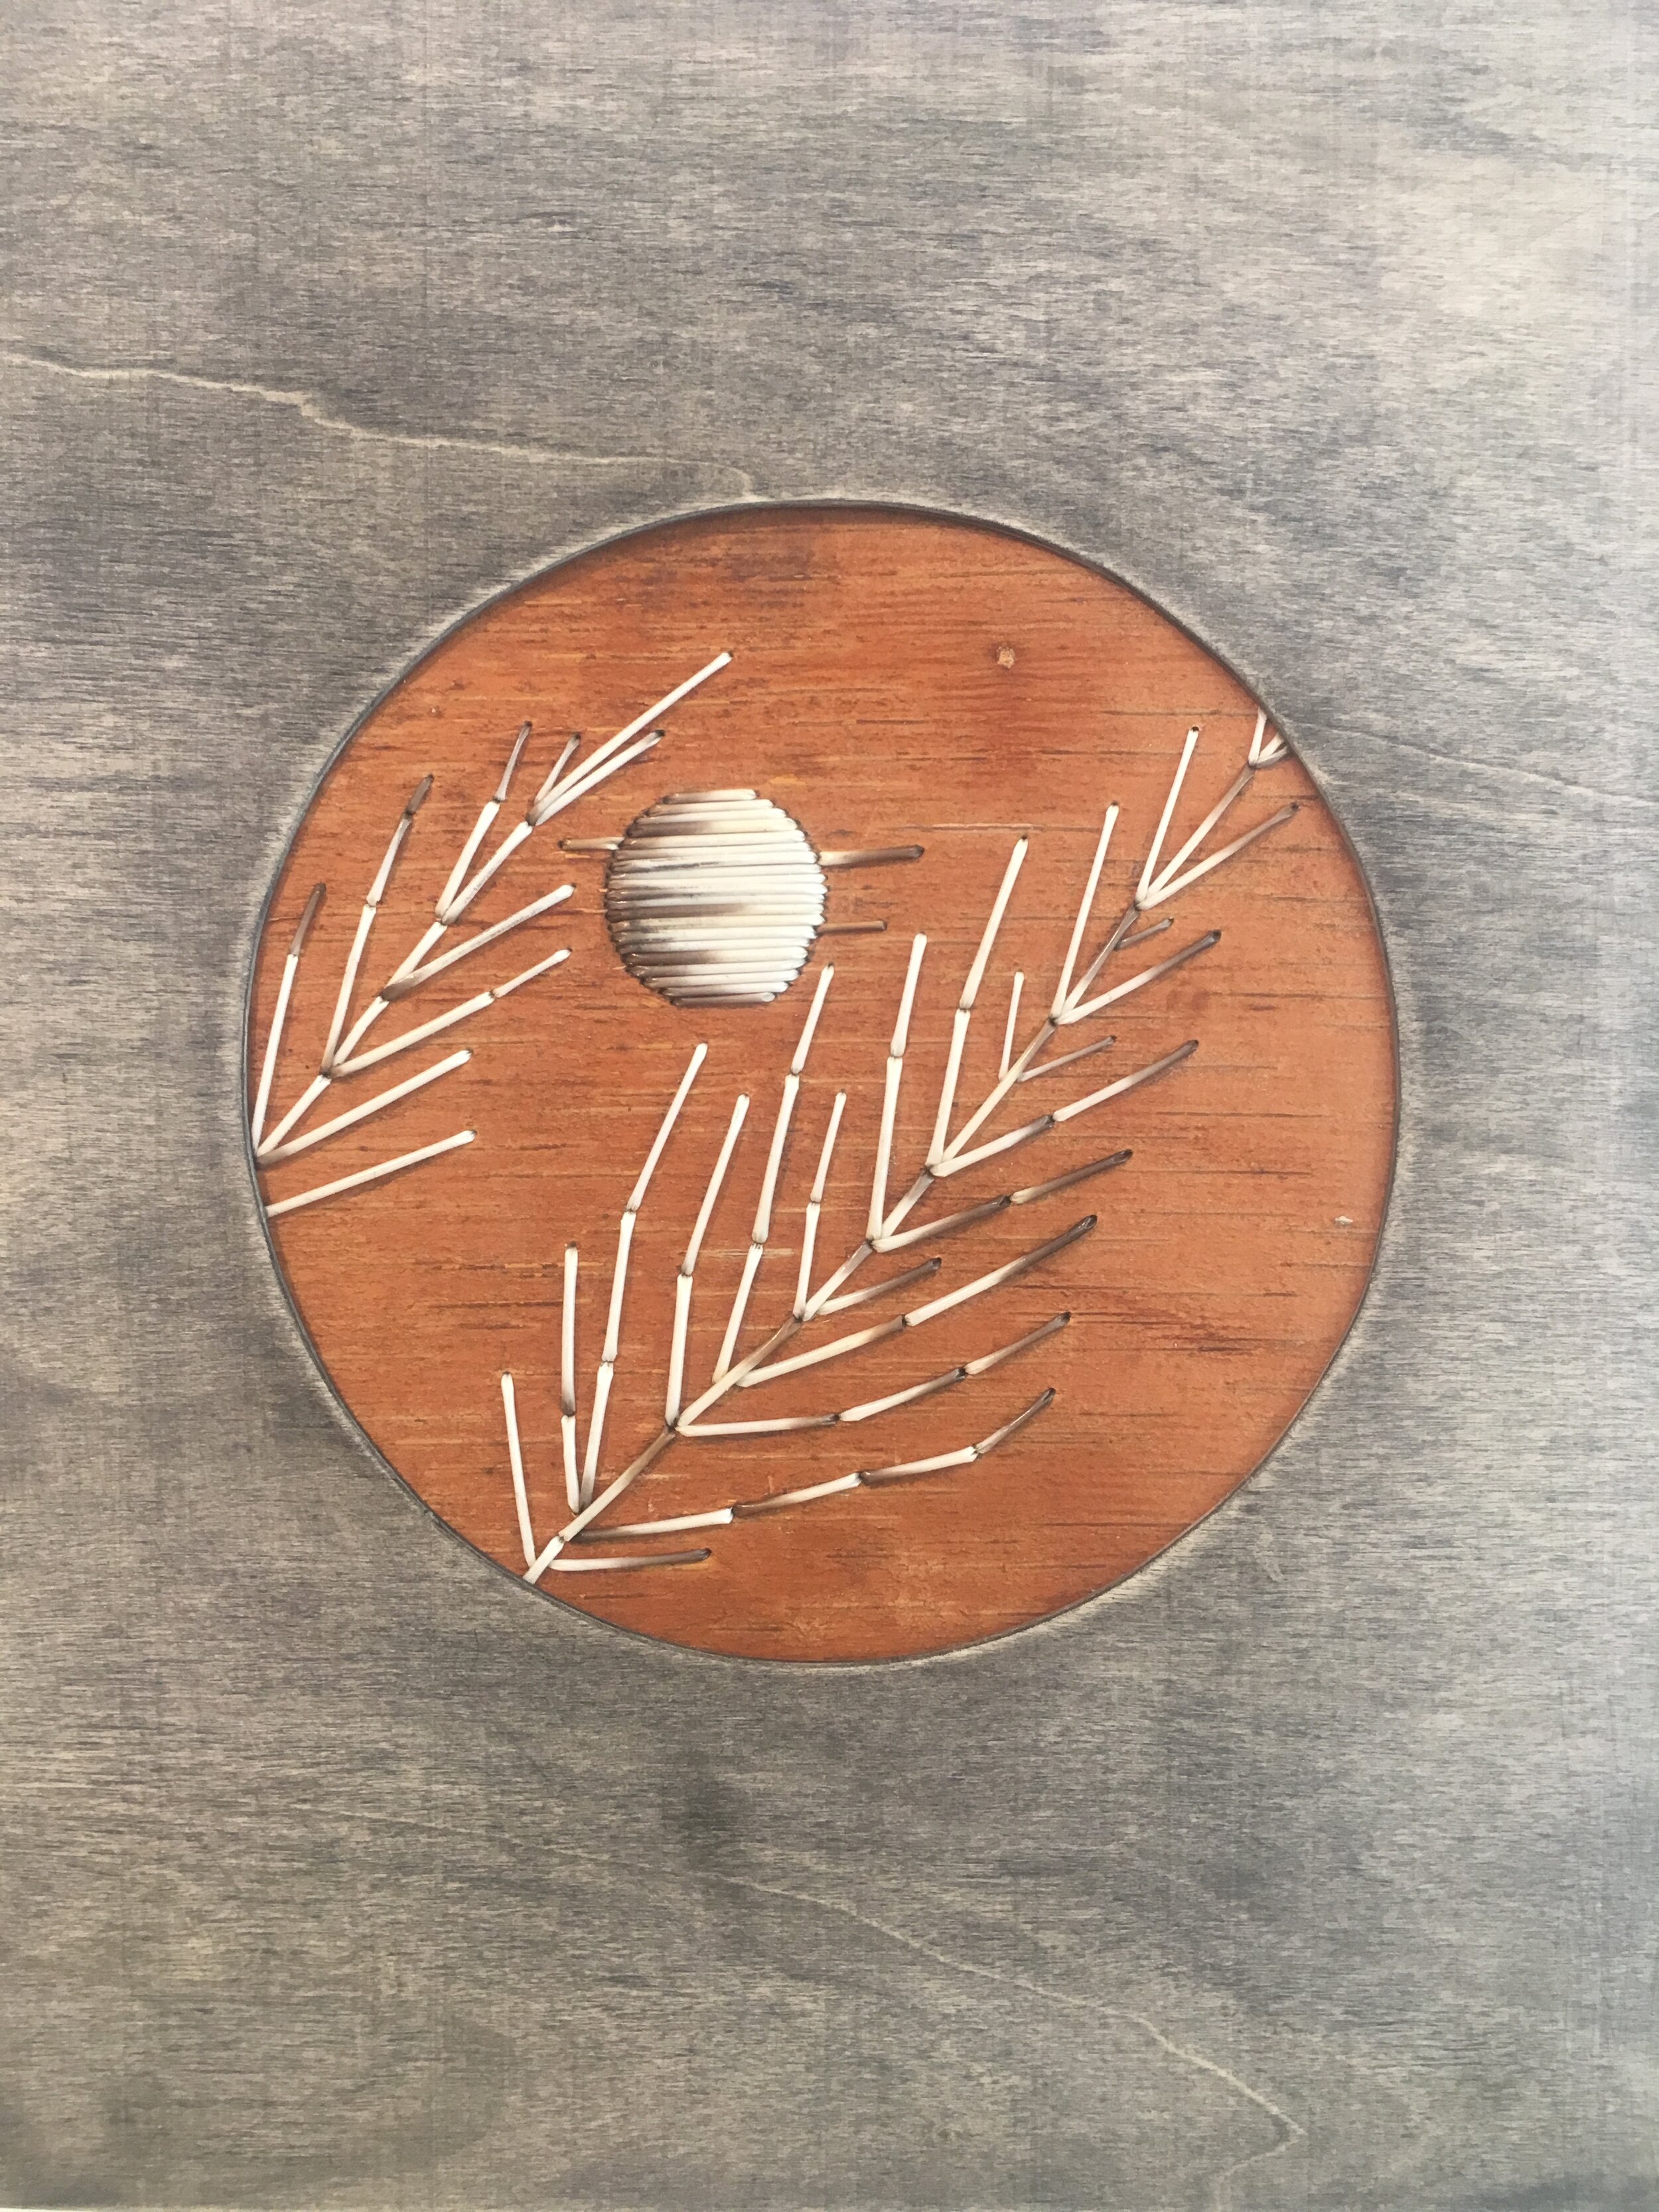 $700.00, Harvest Moon - 8"x10", porcupine quills, birch bark, wood panel